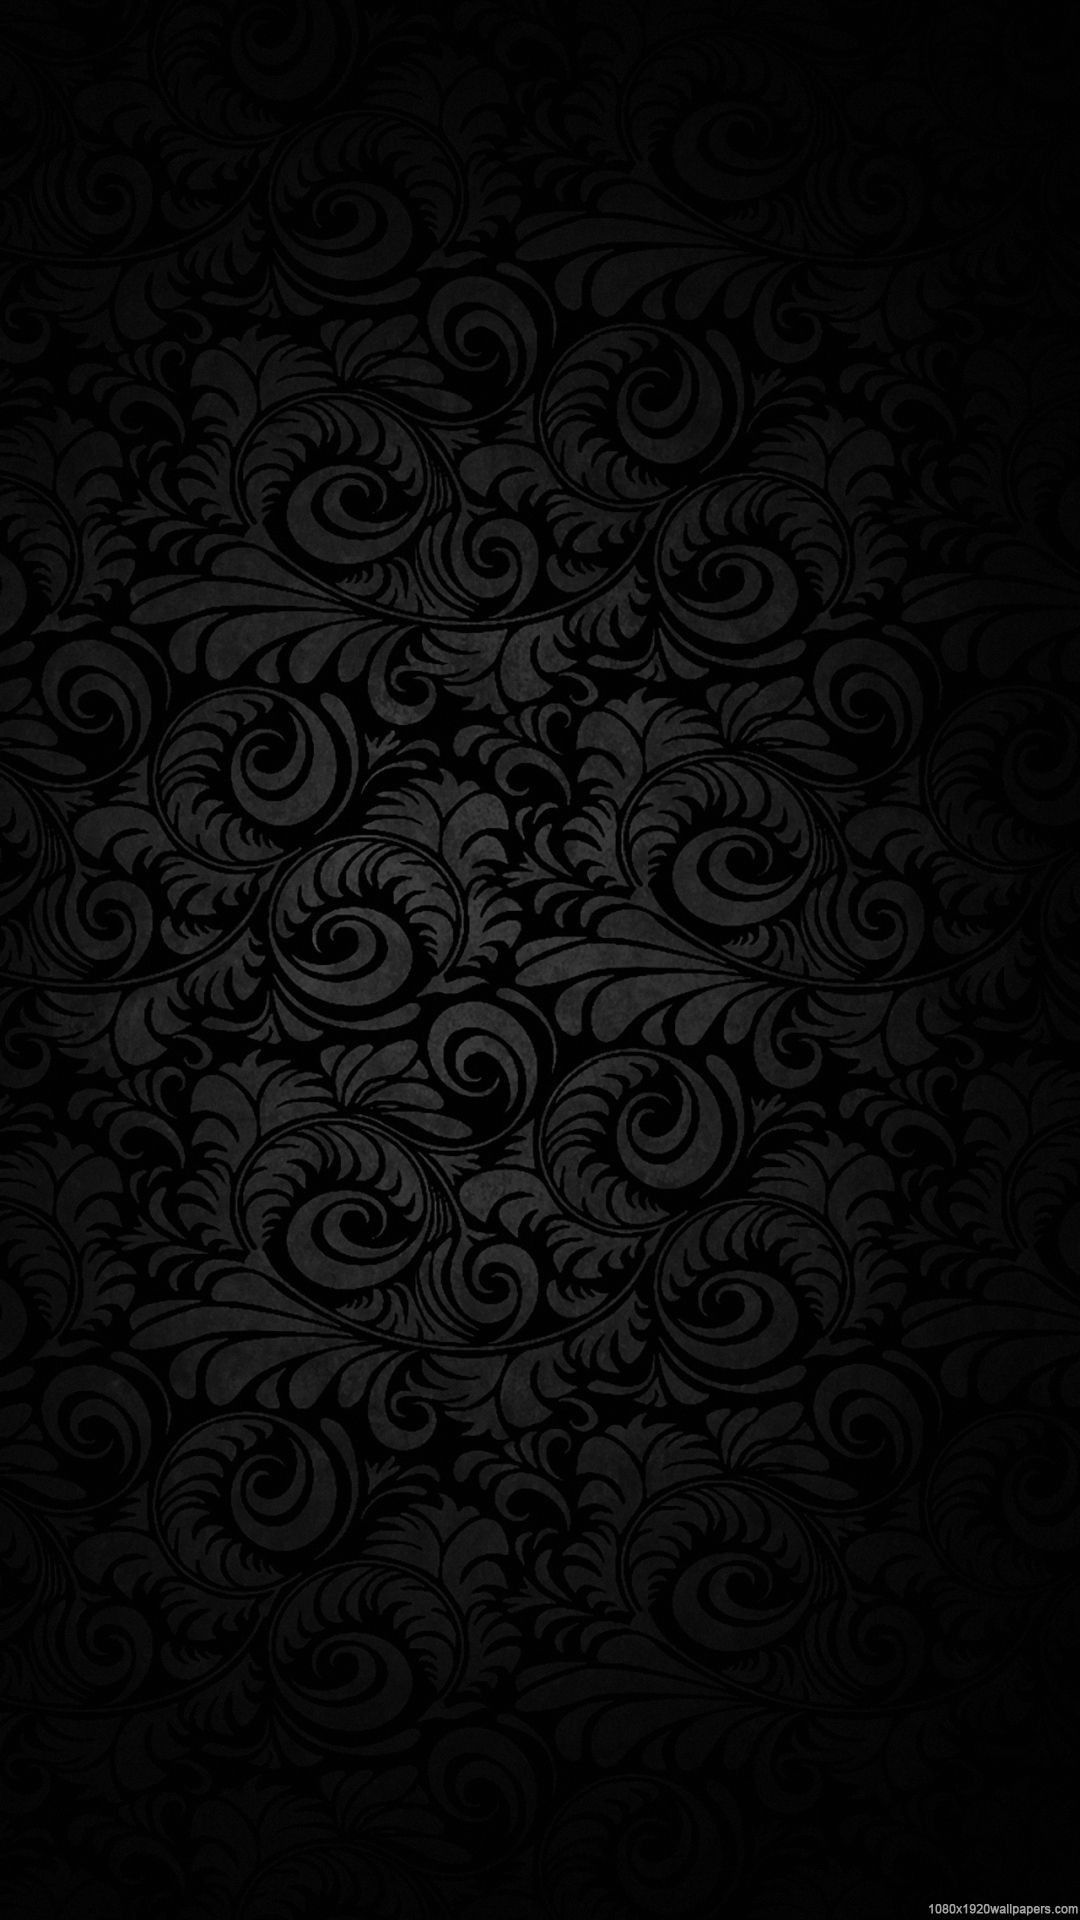 Black Mobile Wallpapers 4k Hd Black Mobile Backgrounds On Wallpaperbat